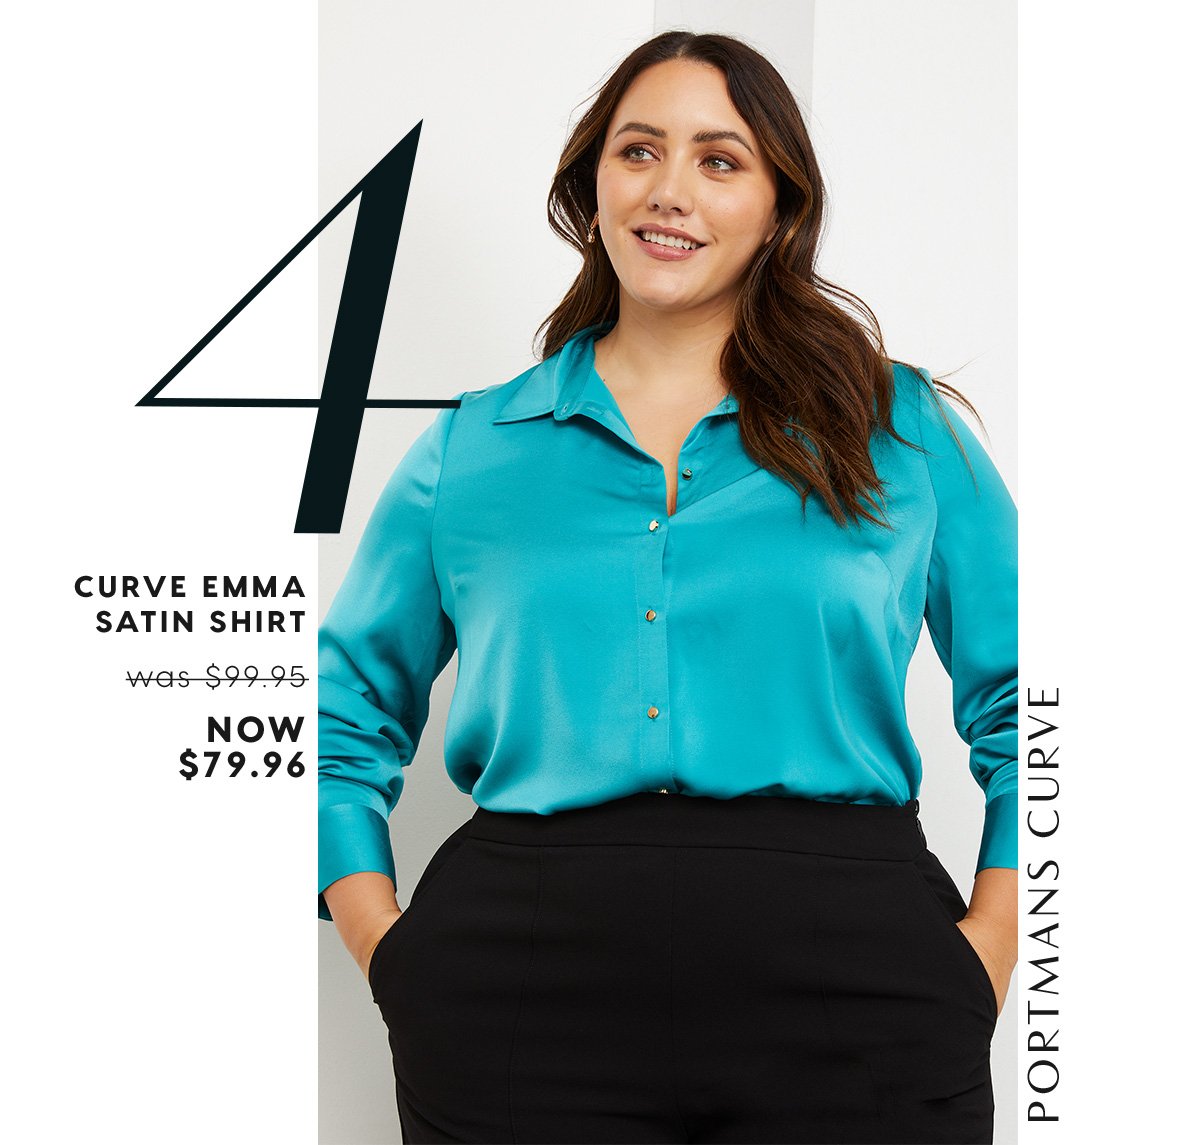 4. Curve Emma Satin Shirt